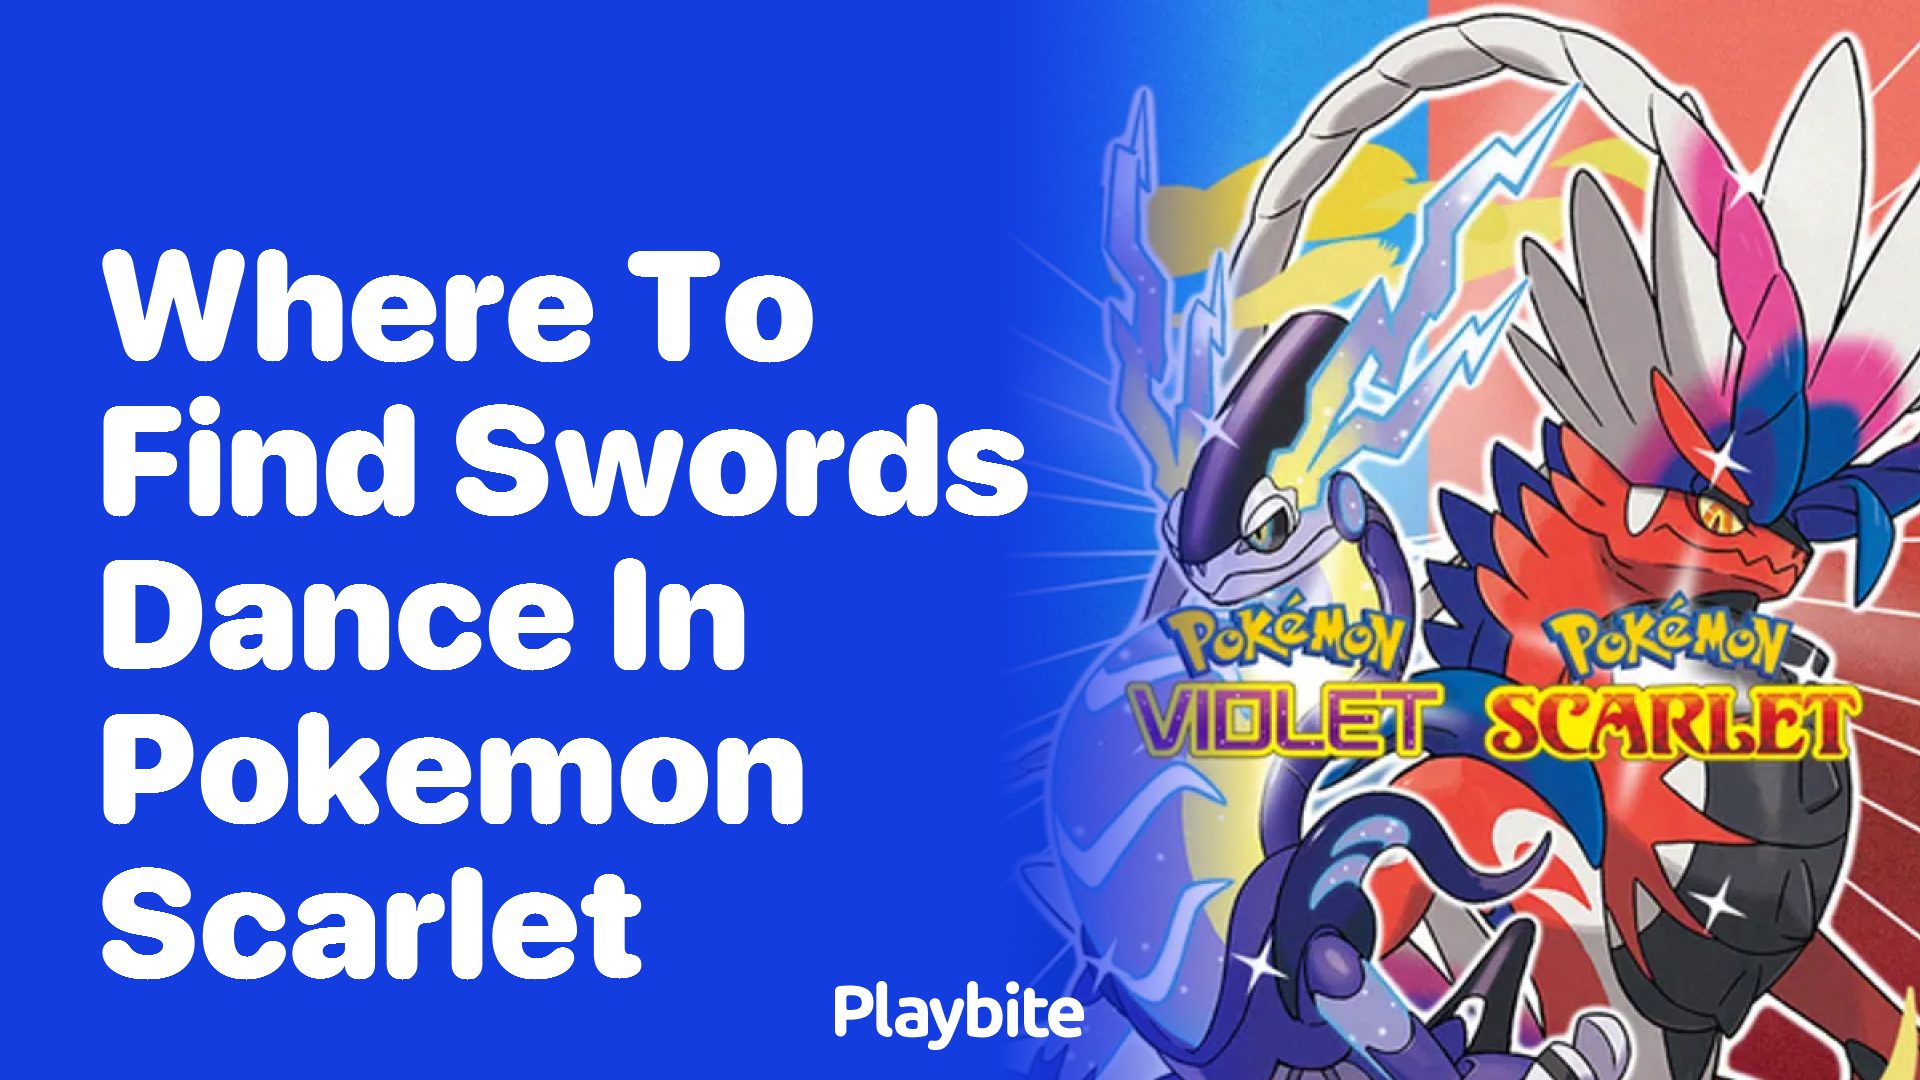 Where to Find Swords Dance in Pokemon Scarlet